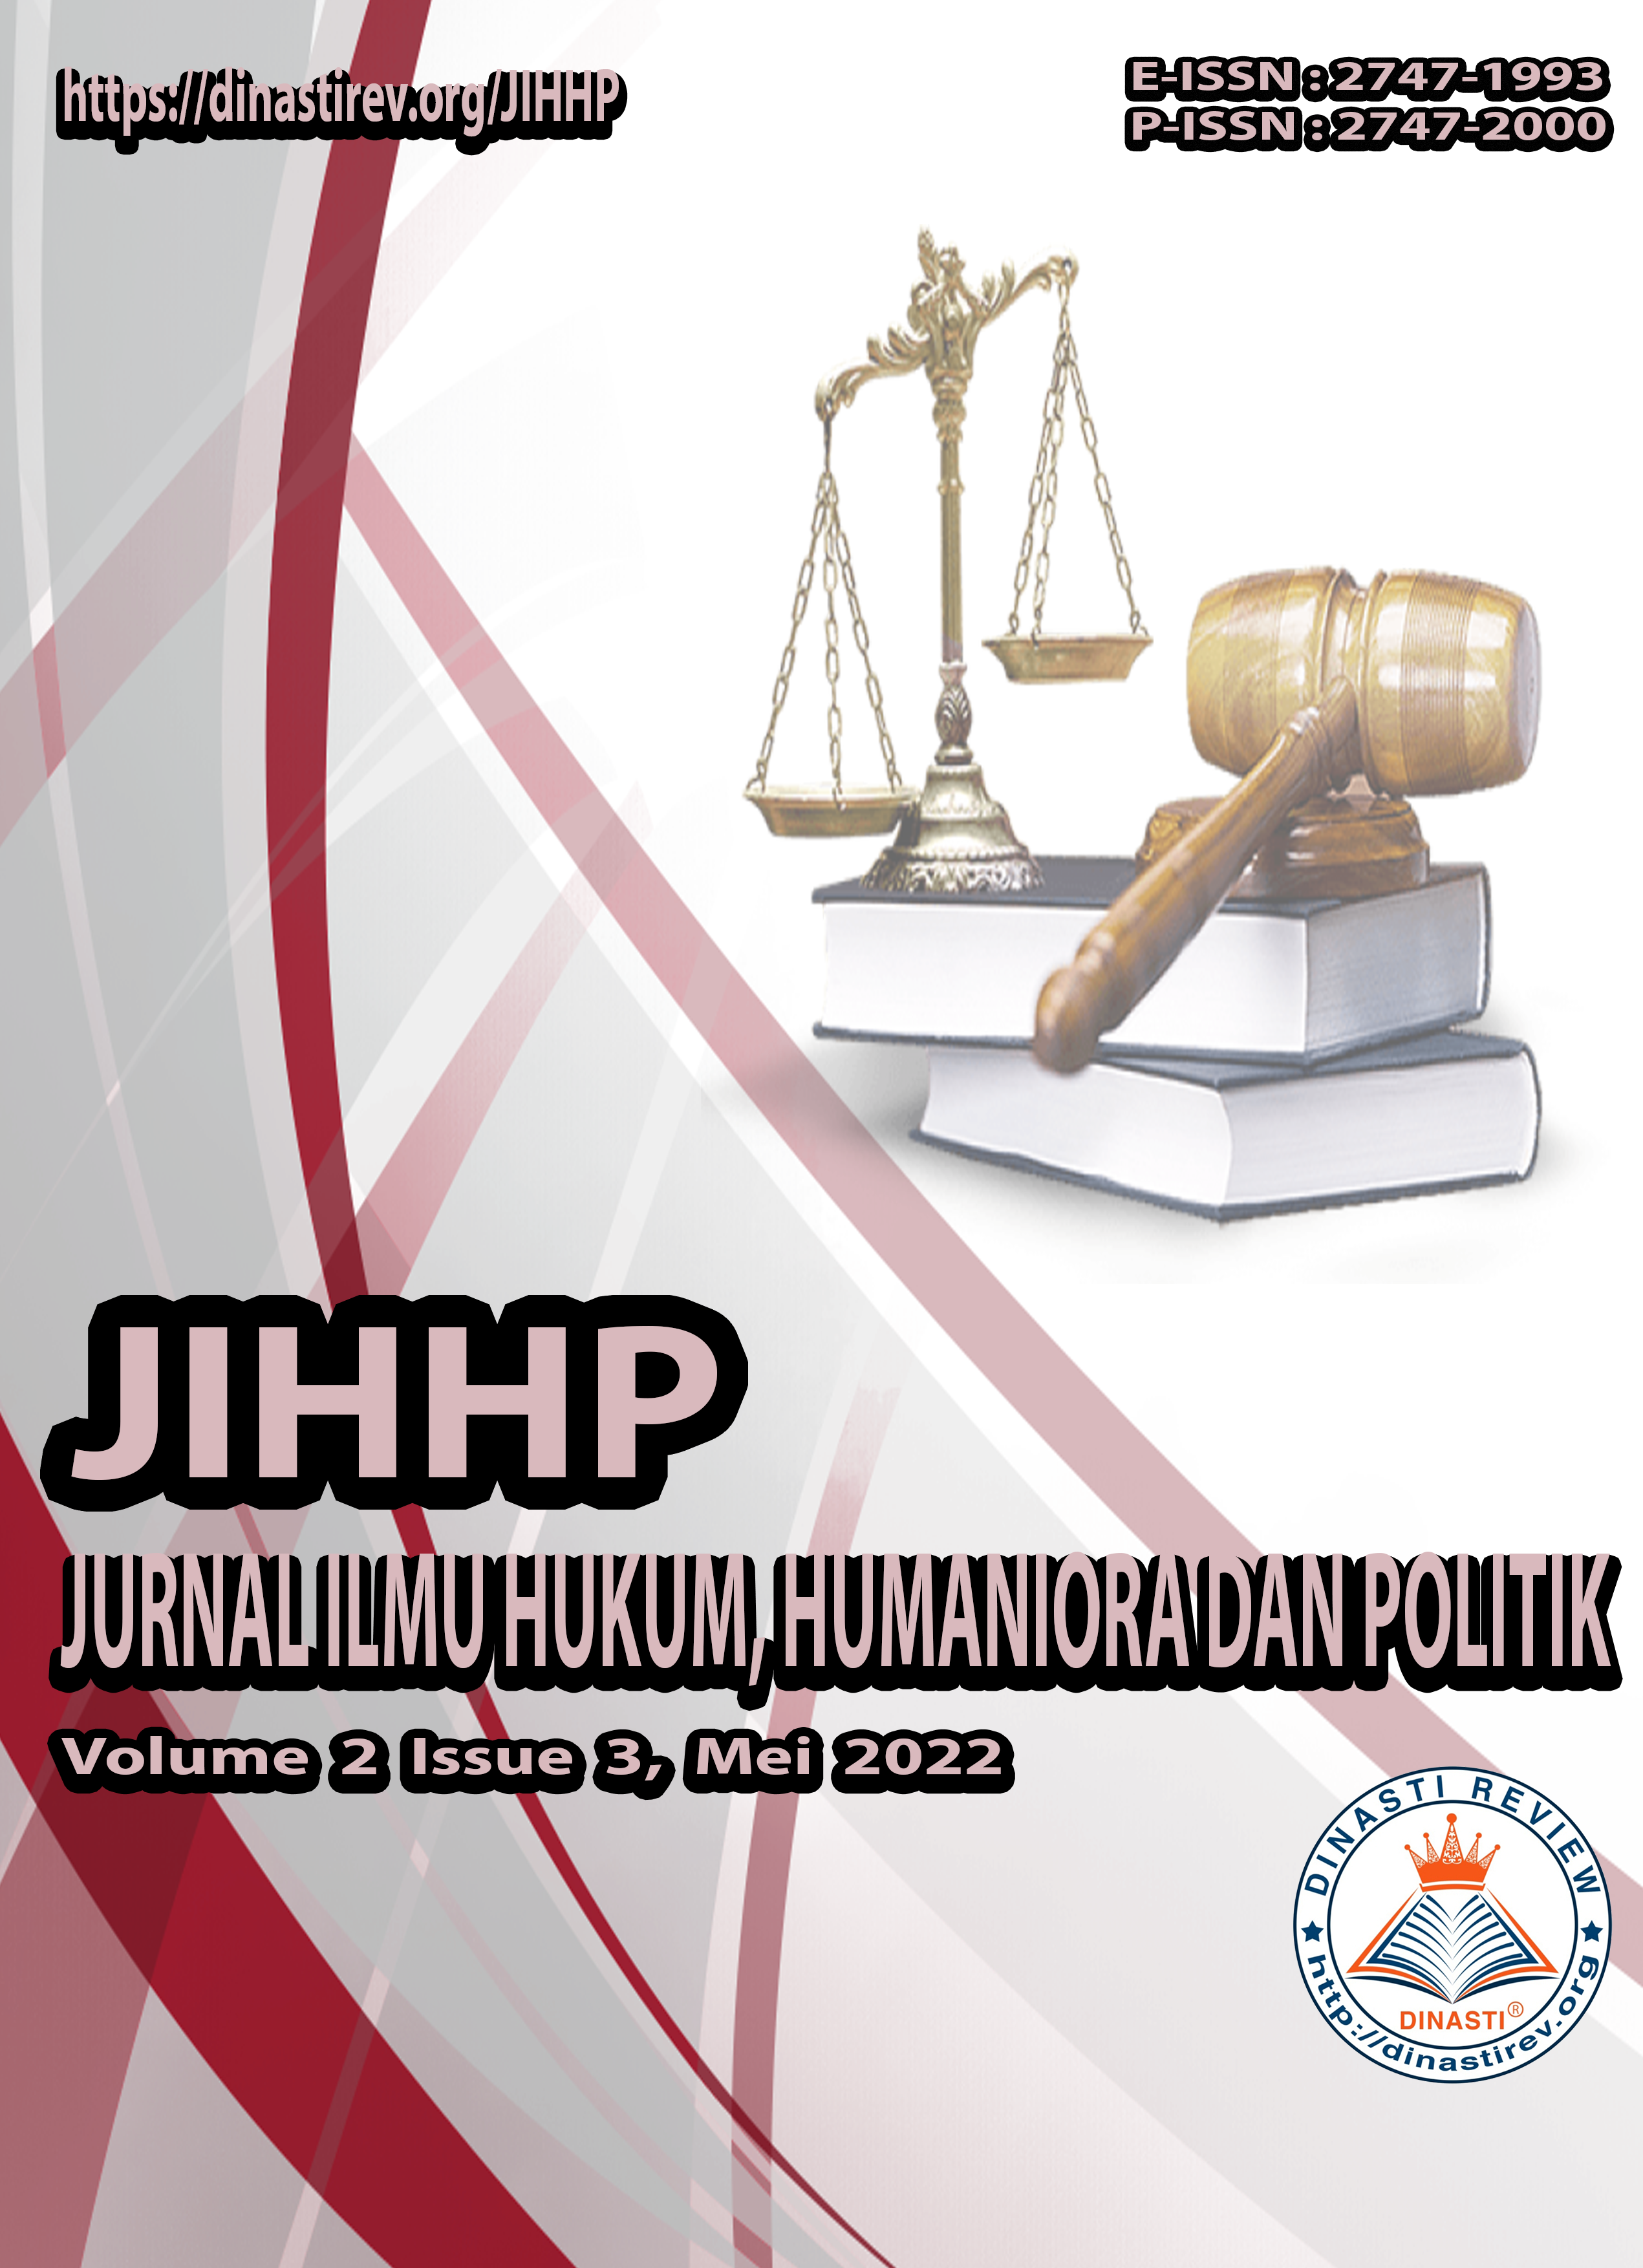 					View Vol. 2 No. 3 (2022): (JIHHP) Jurnal Ilmu Hukum, Humaniora dan Politik (Mei 2022)
				